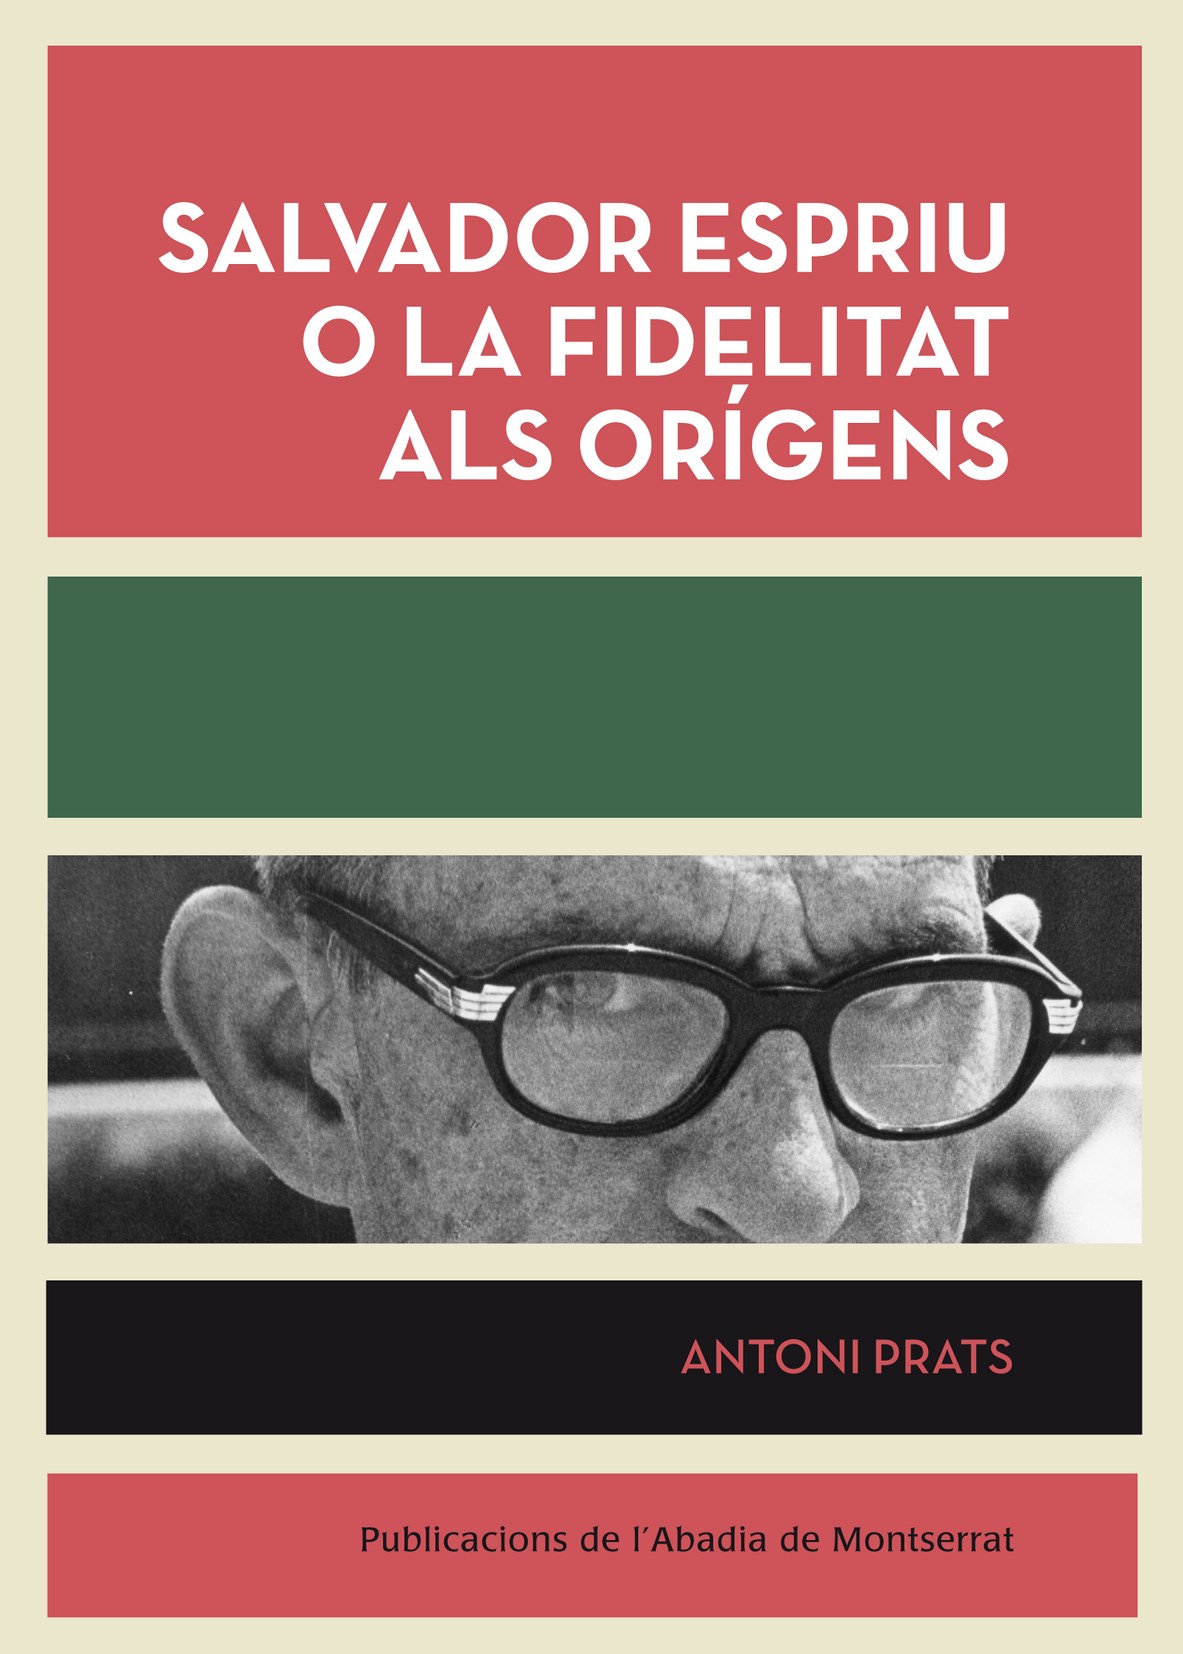 Antoni Prats i Gràcia